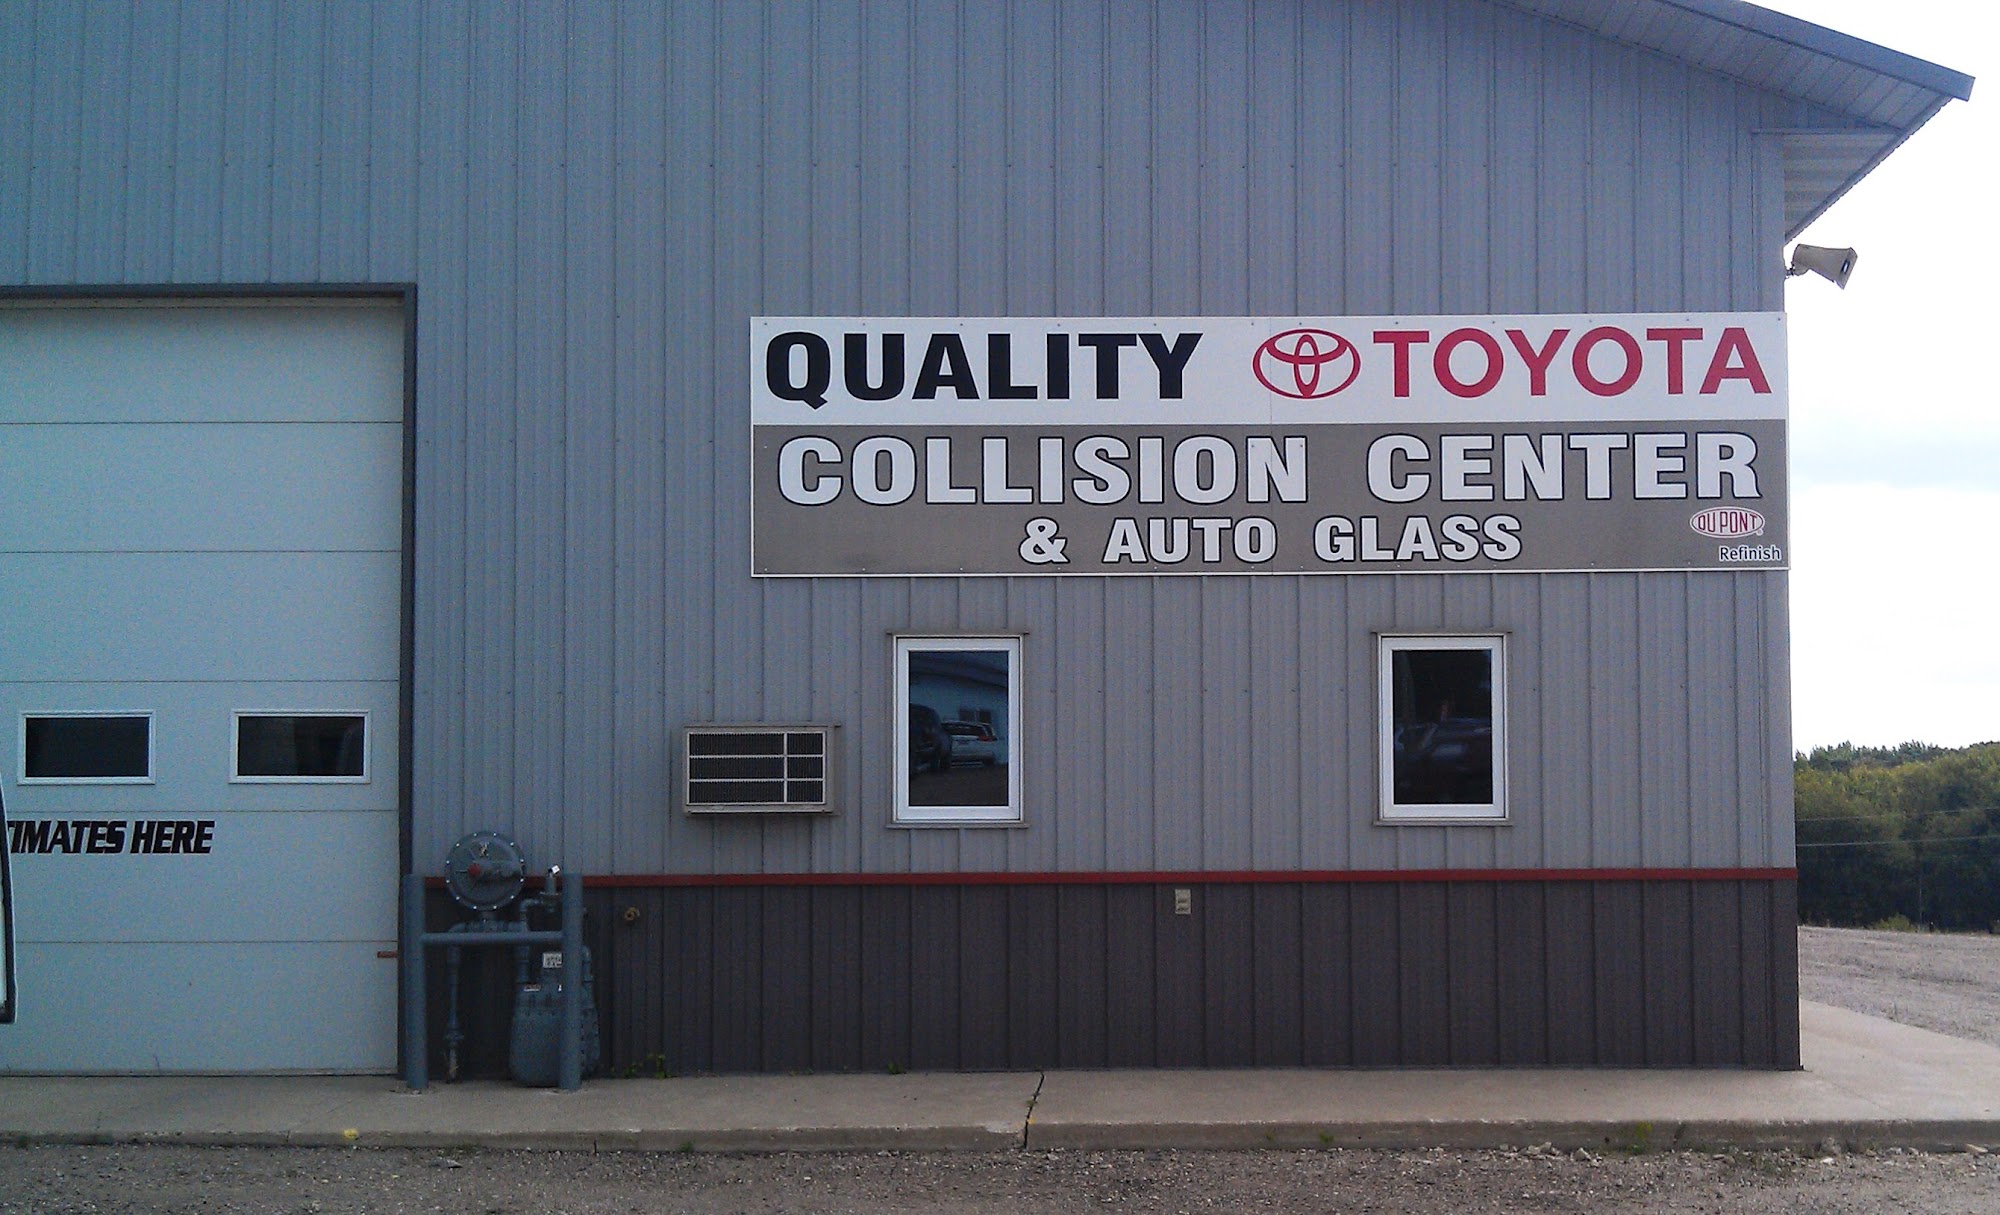 Quality Toyota - Collision Center